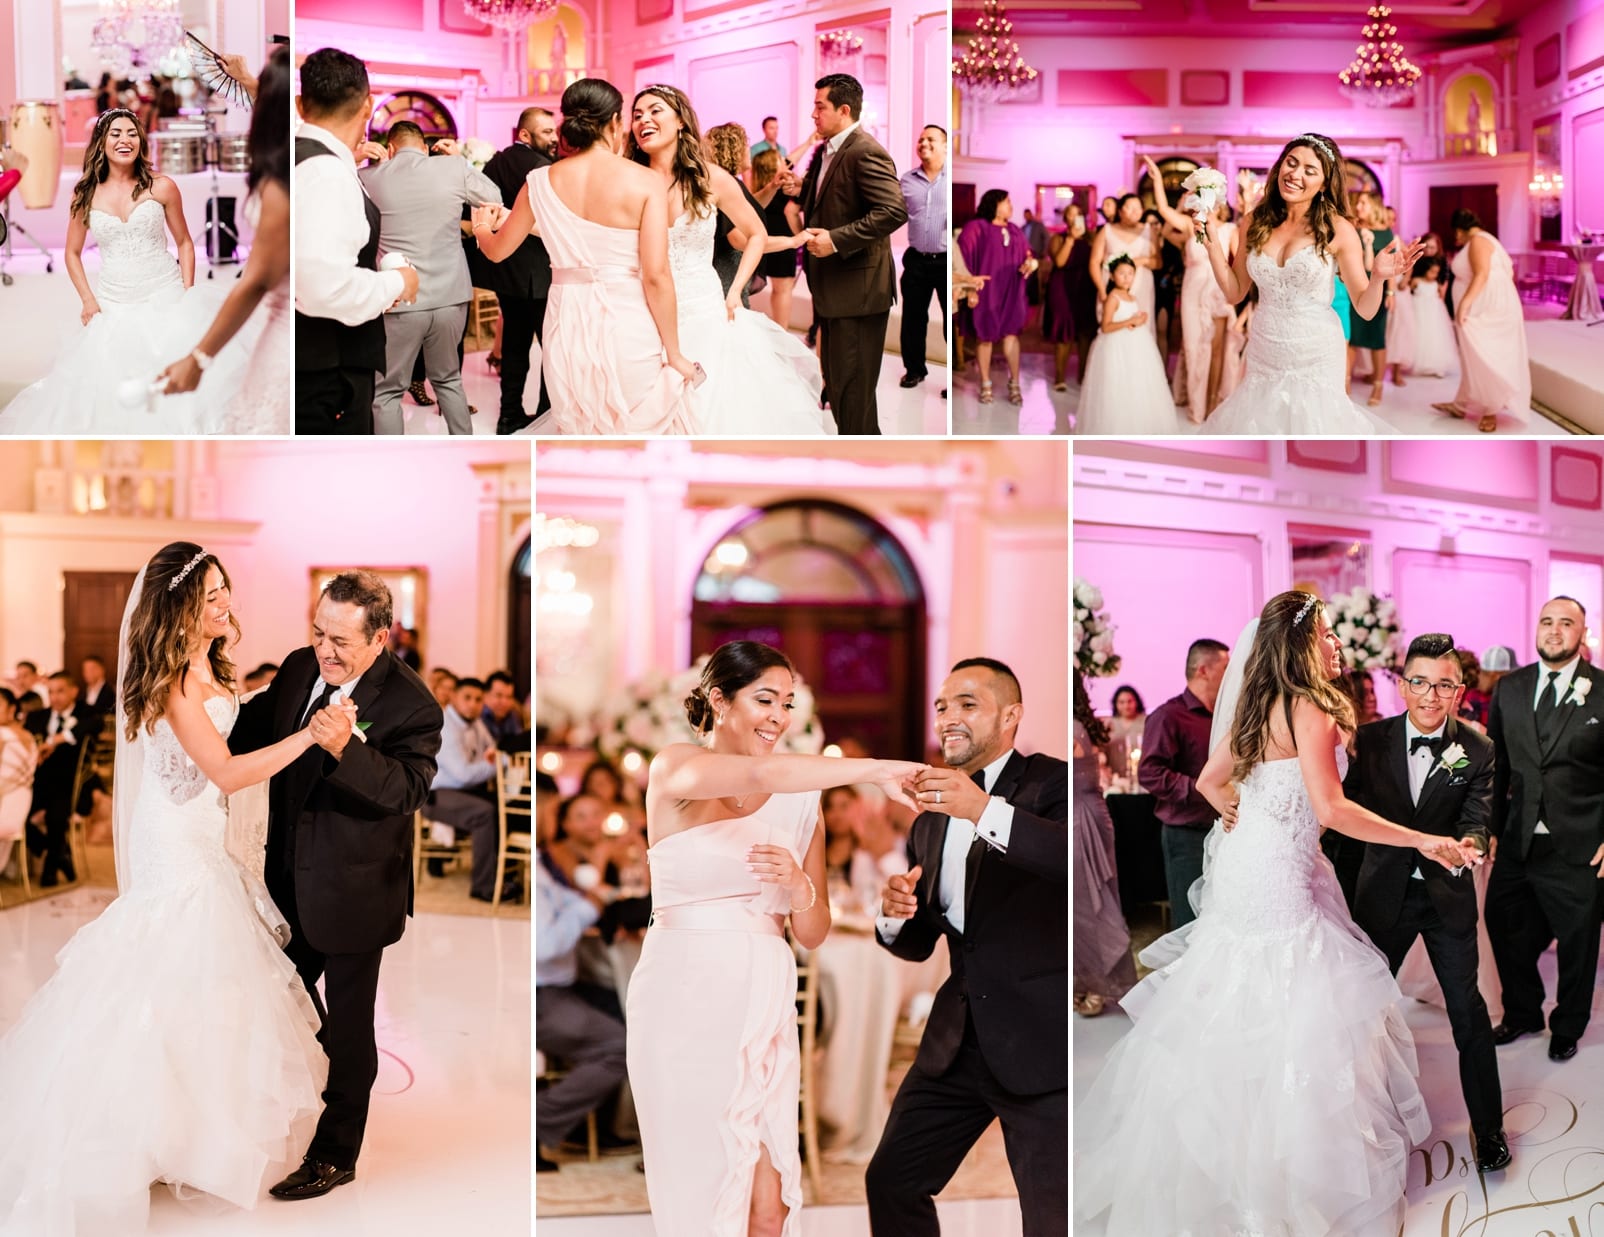 Grand Marquise Ballroom wedding reception dancing photo